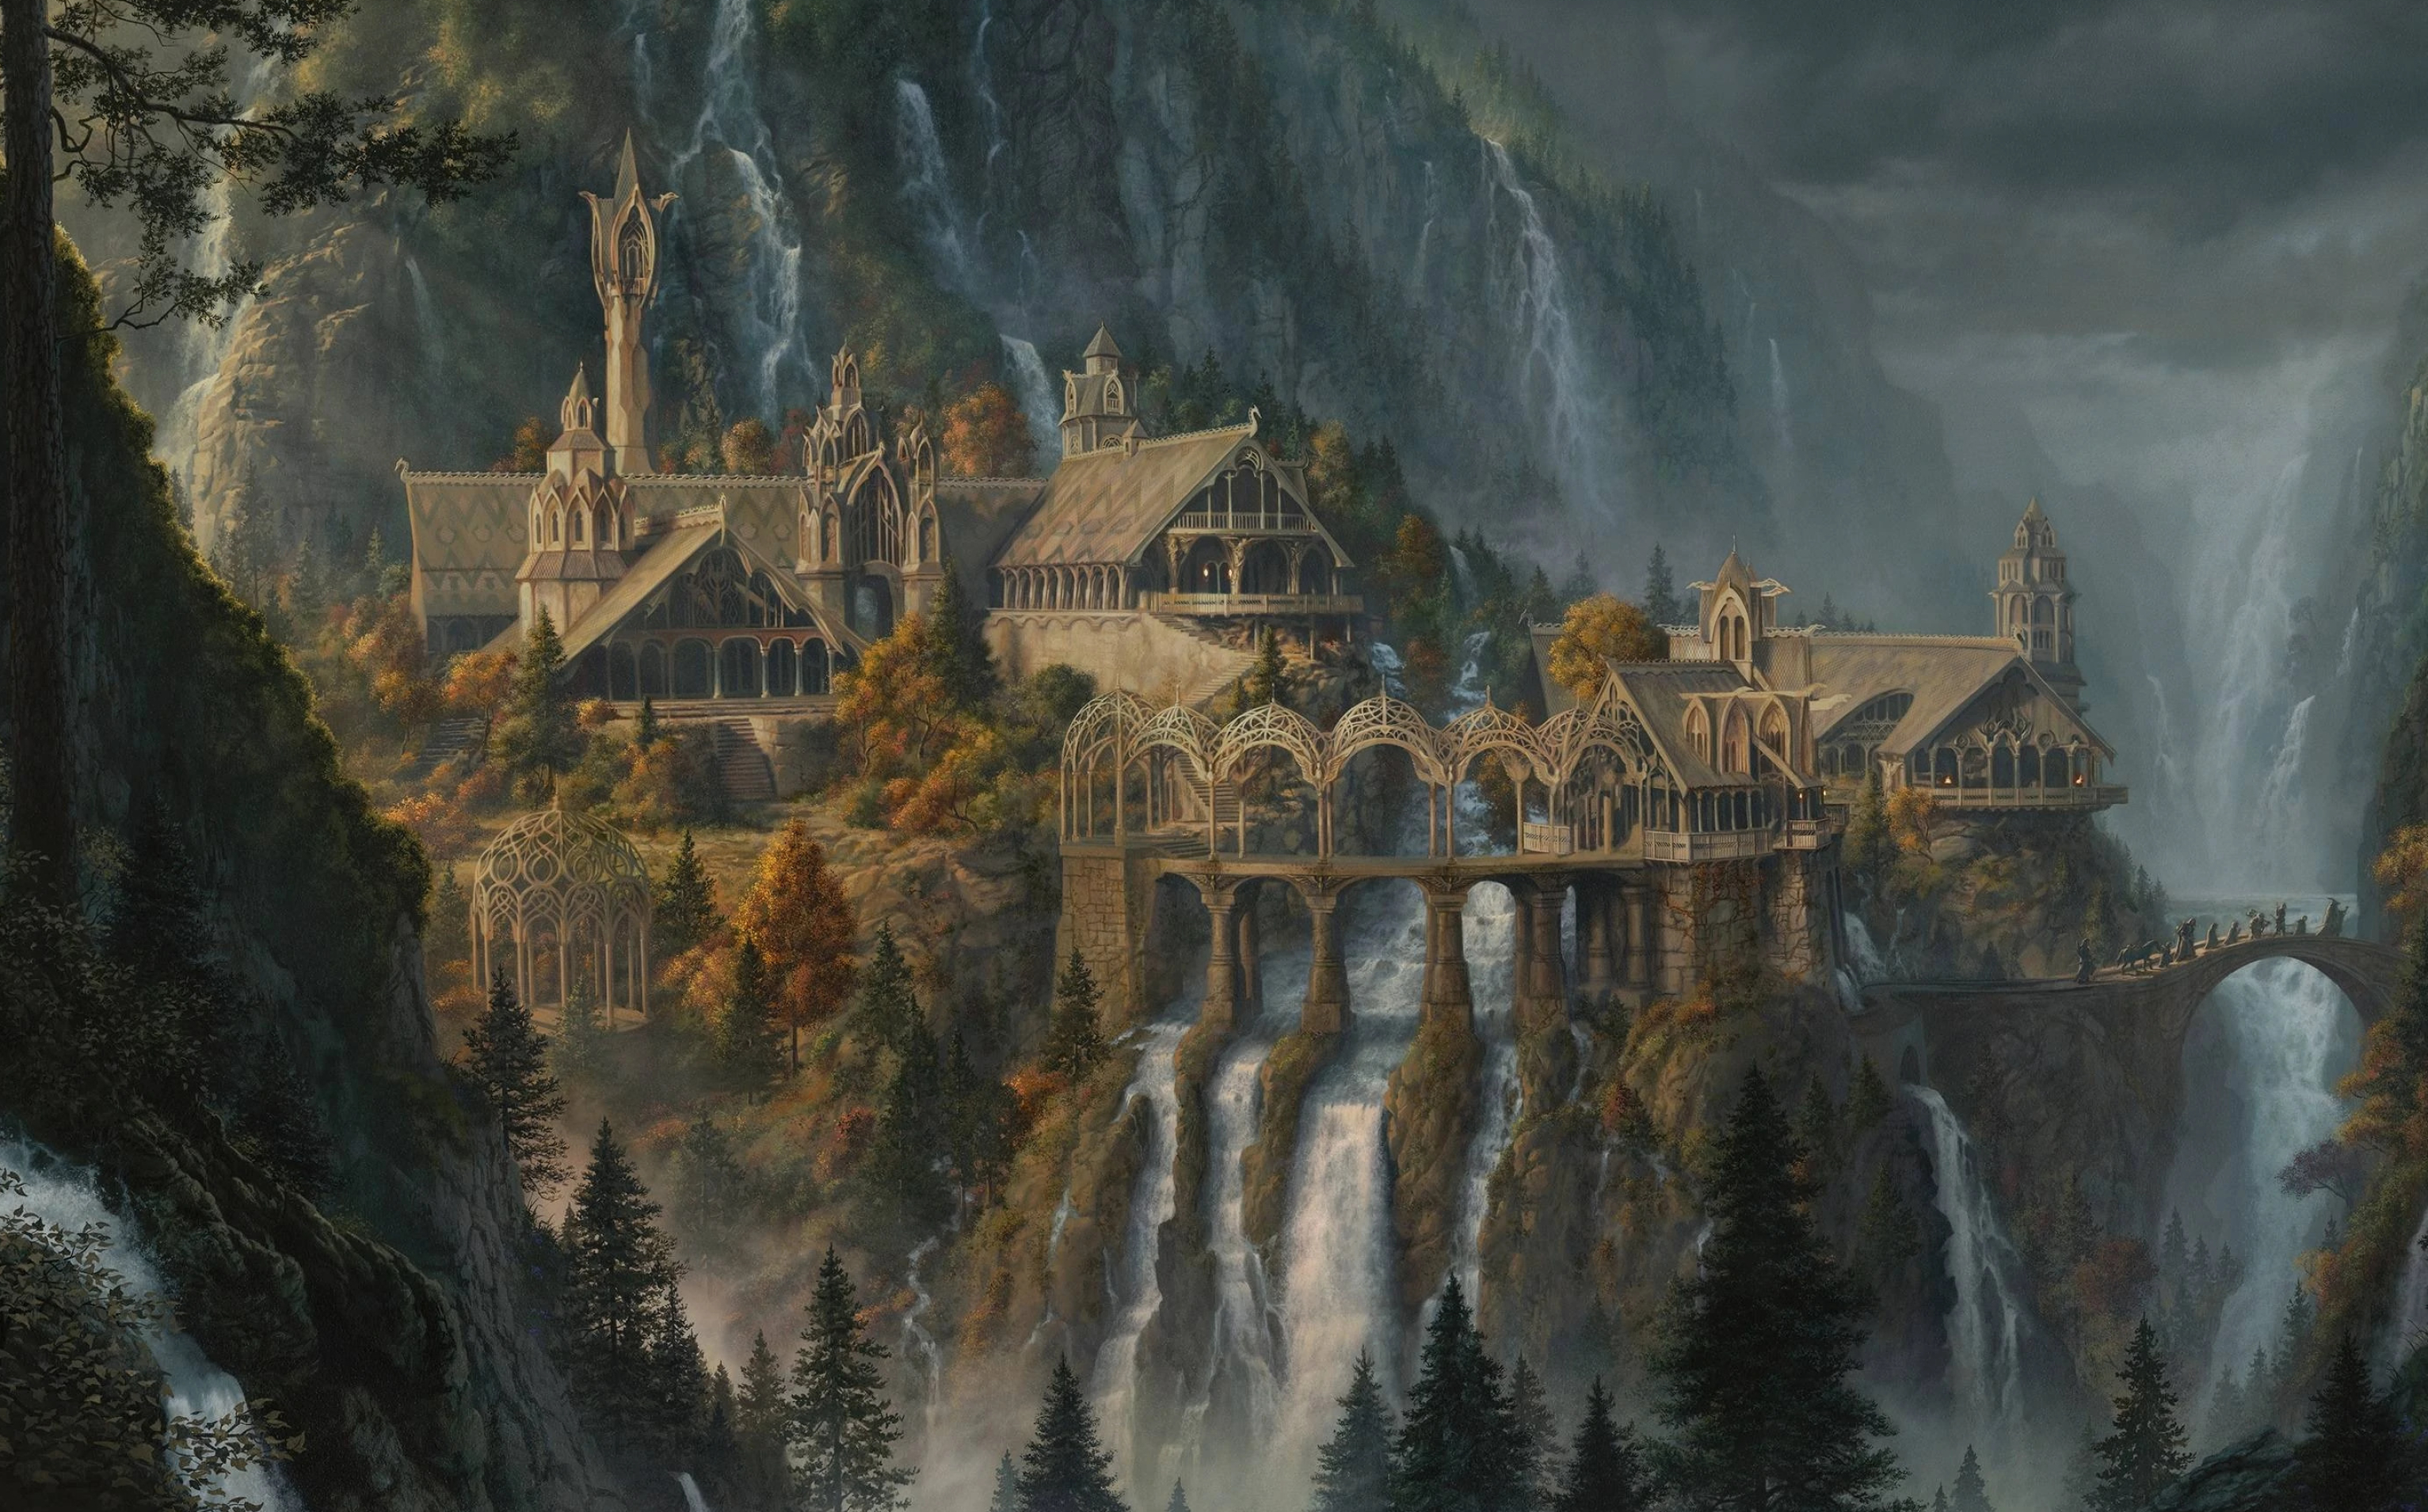 HD wallpaper, Elven City, Desktop Hd Rivendell Wallpaper Image, Rivendell, Fantasy Location, 3070X1910 Hd Desktop, Lord Of The Rings